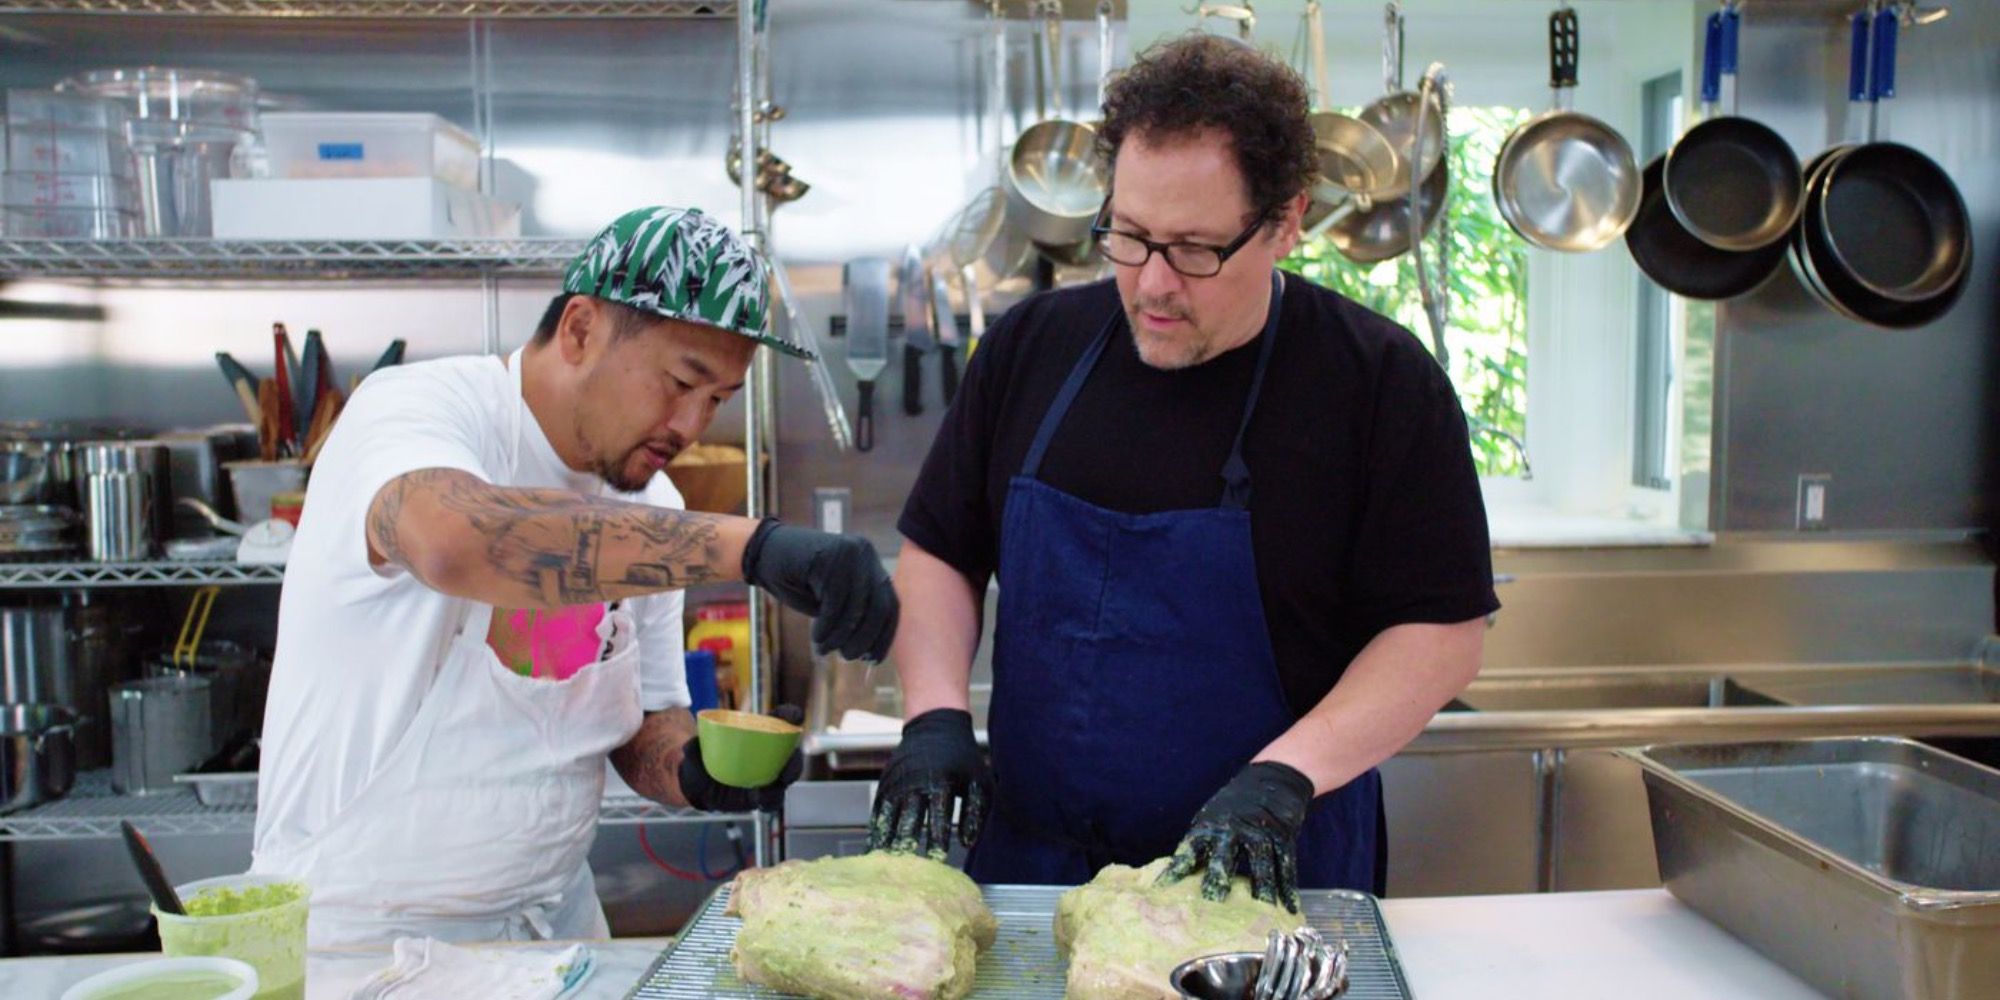 Chef Roy Choi et Jon Favreau Chef Show Cooking Together